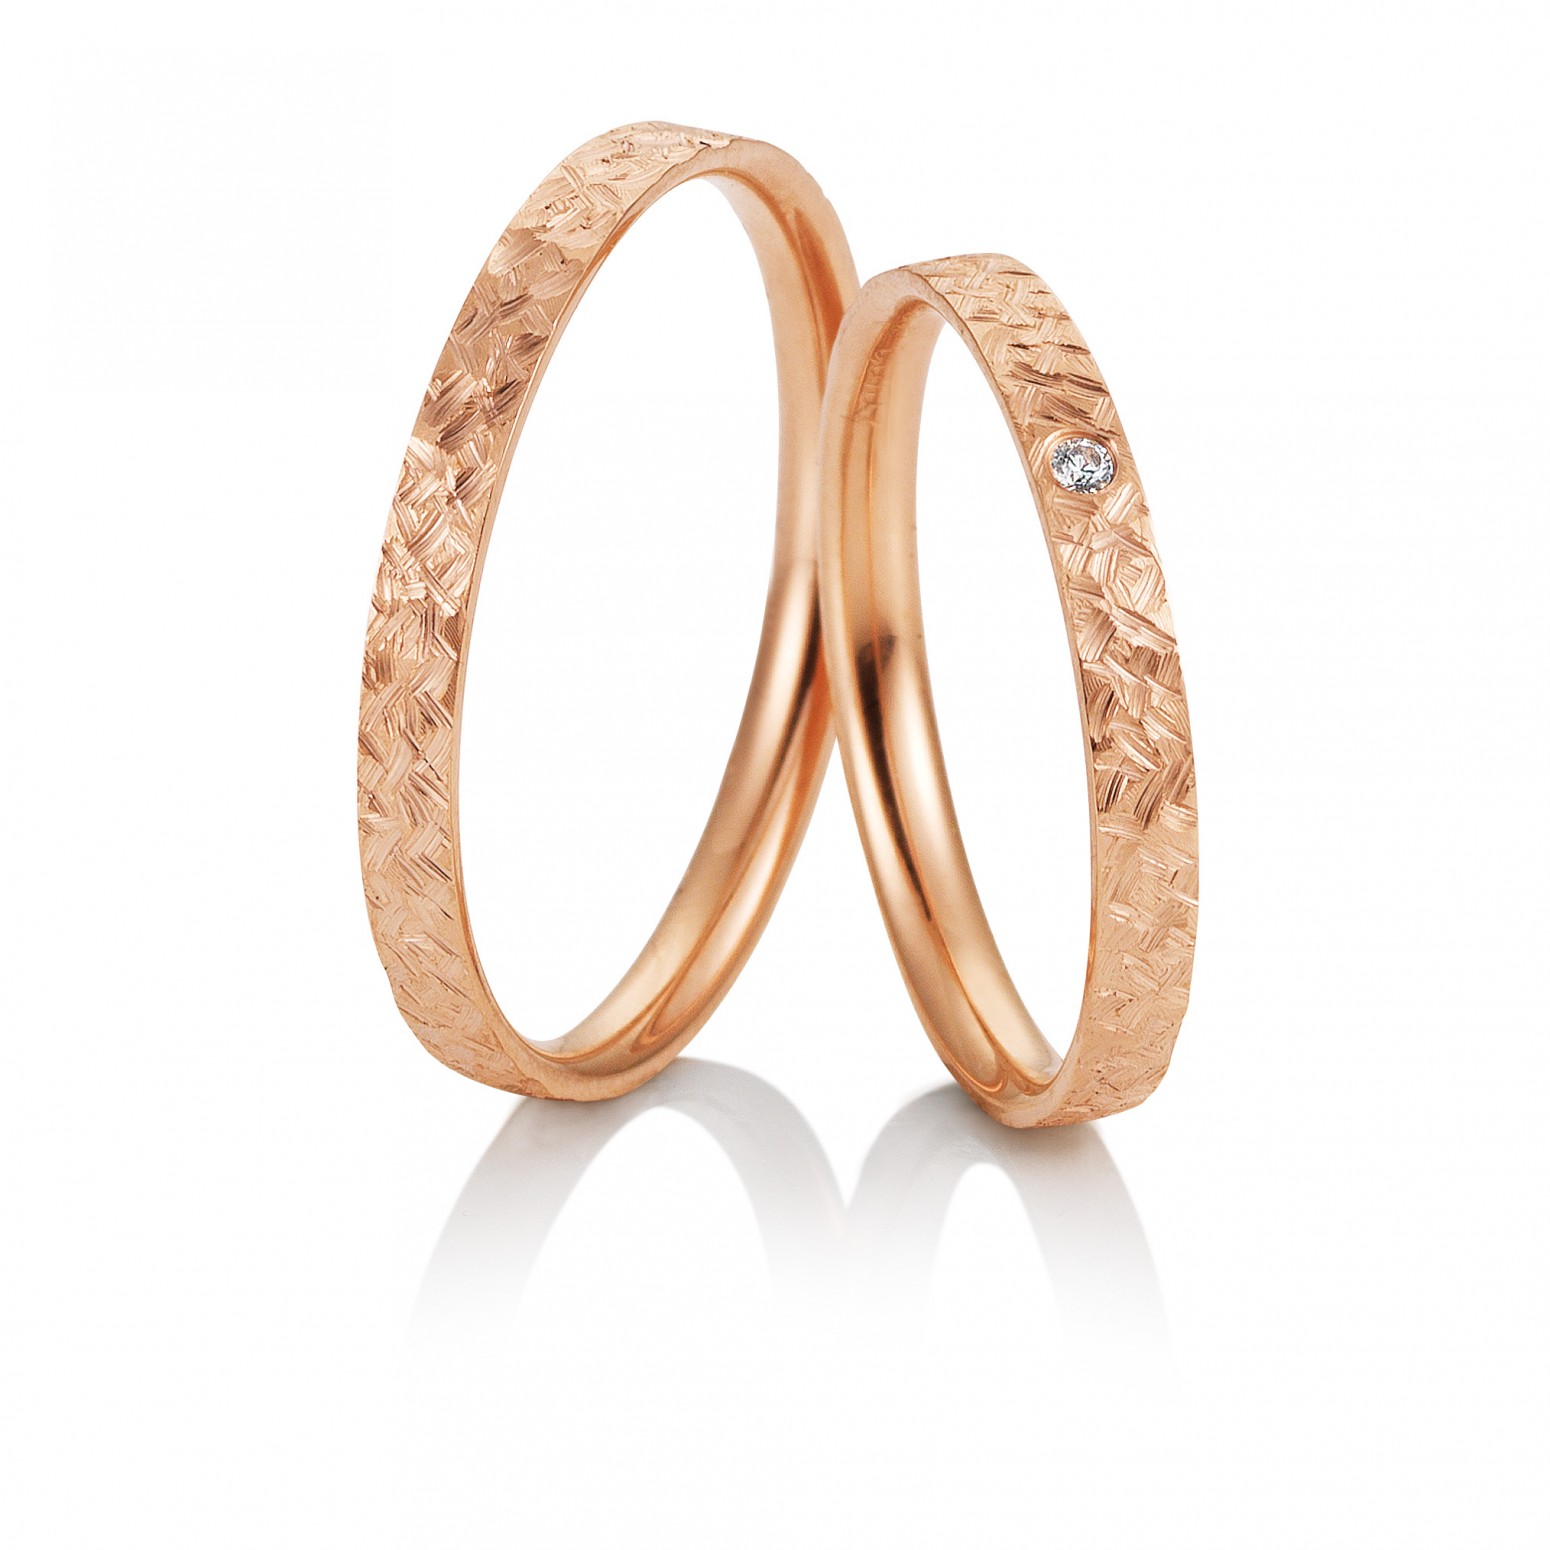 Saint Maurice wedding rings pink gold, K9, pair da3598 WEDDING RINGS Κοσμηματα - chrilia.gr